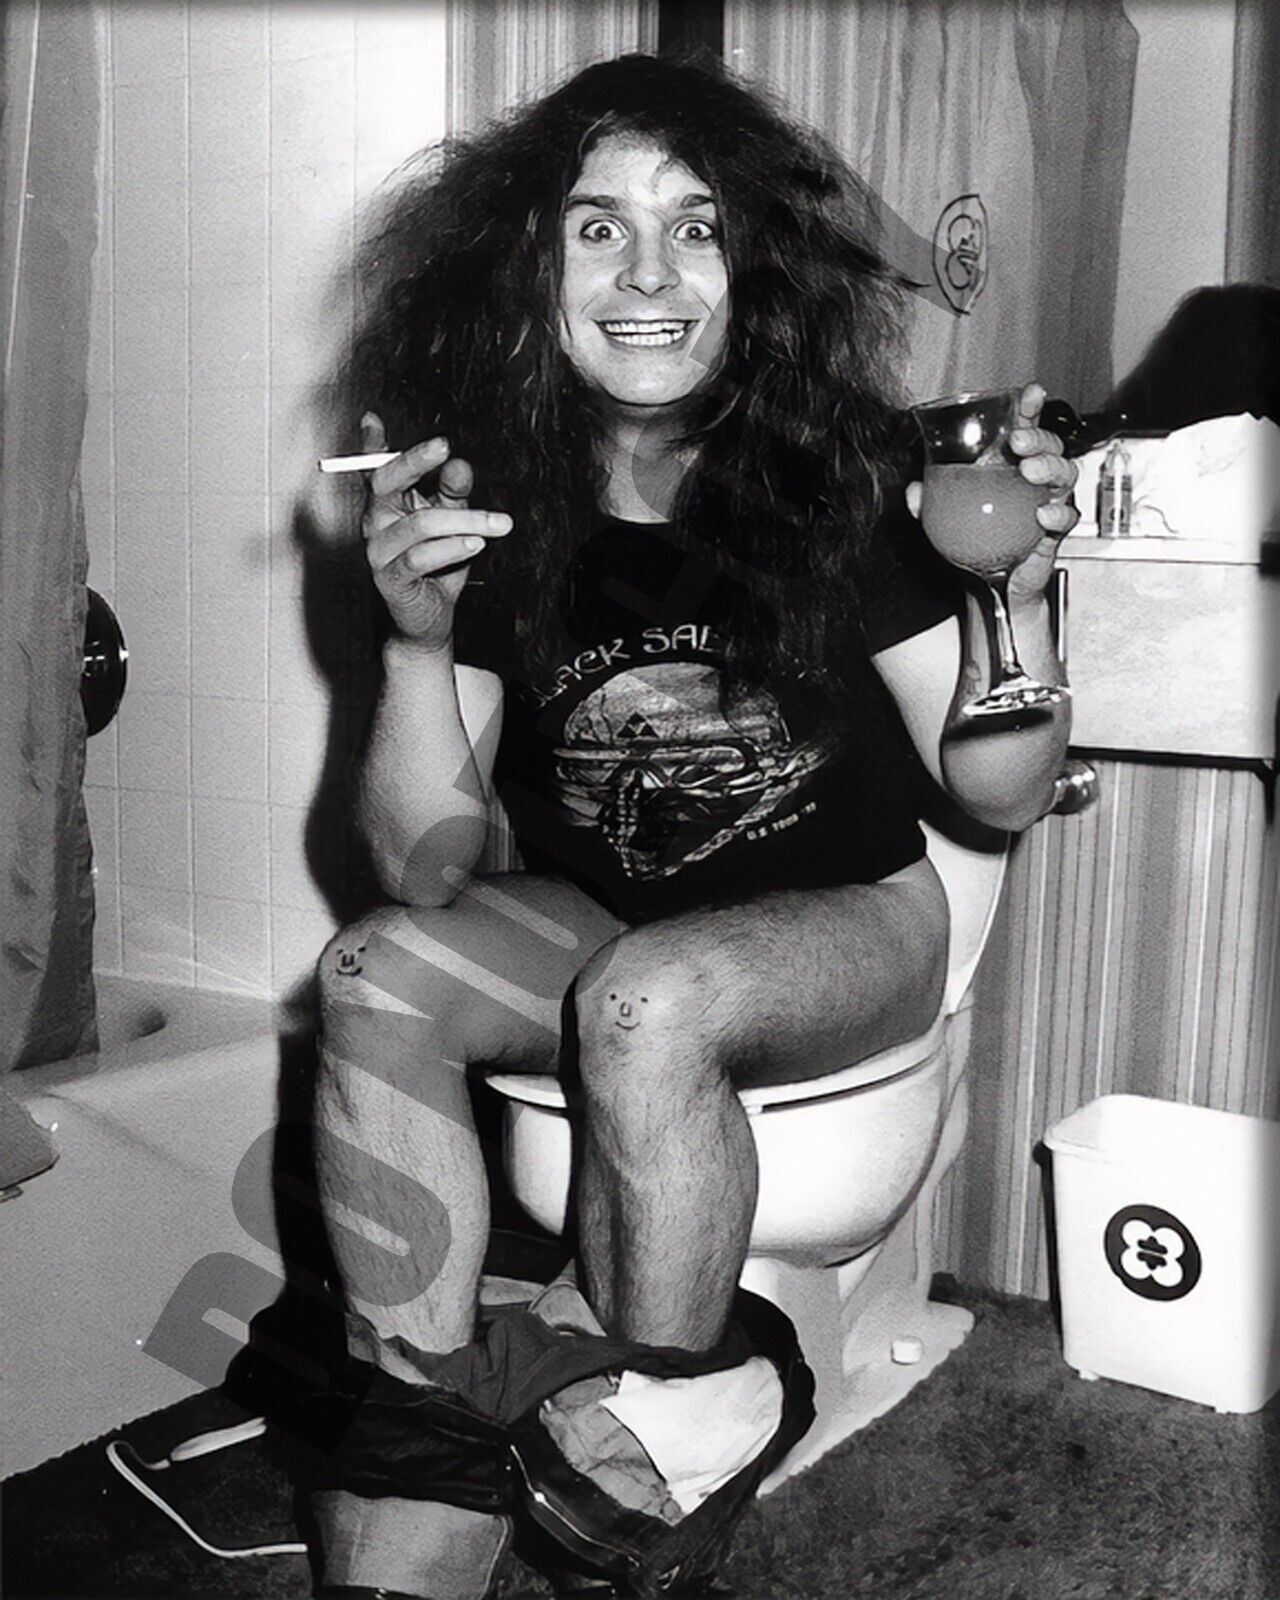 Ozzy Osbourne Black Sabbath Smoking And Drinking On The Toilet 8x10 Photo